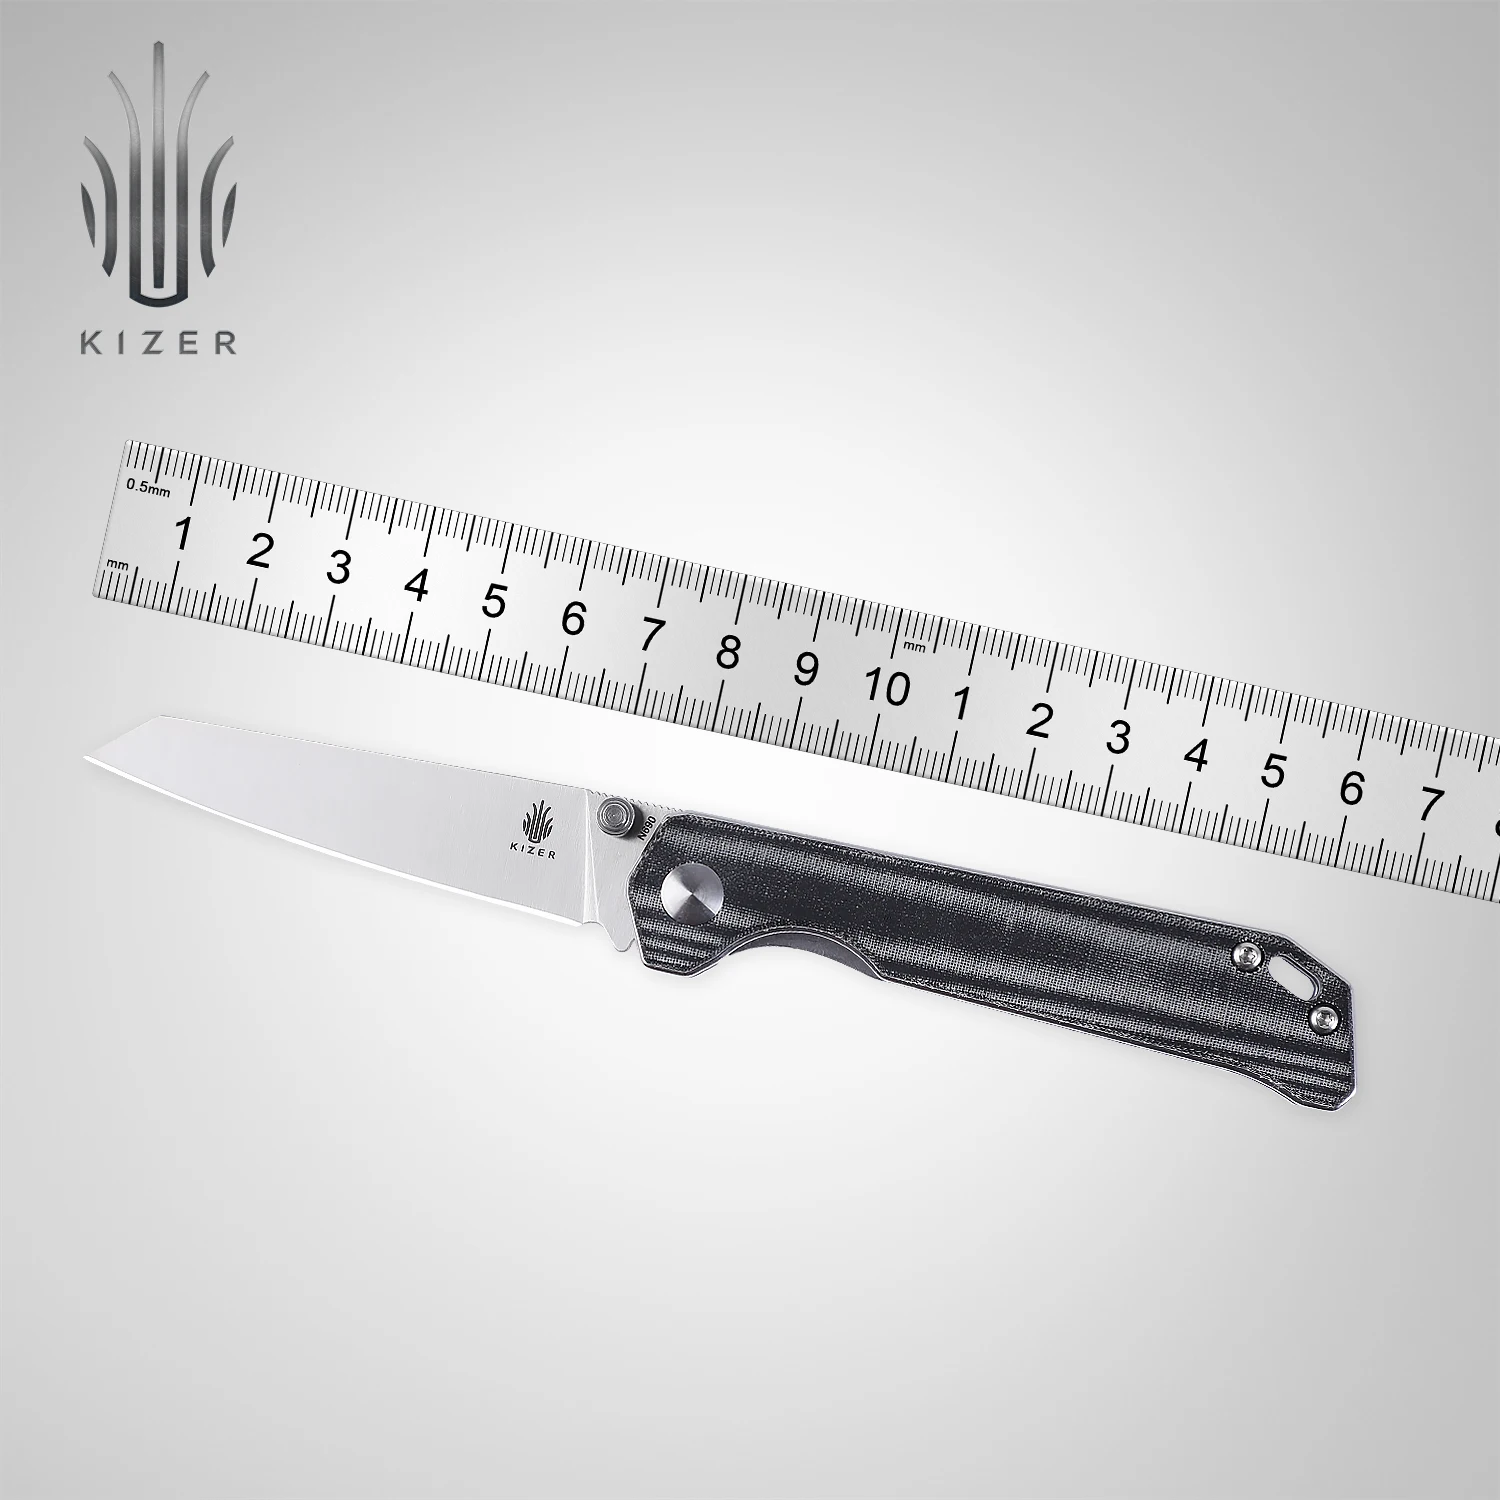 Kizer Mojave Exclusive V3458RE1 Begleiter Mini Pocket Knives Micarta Handle EDC Folding Knife N690 Steel Survival Tool